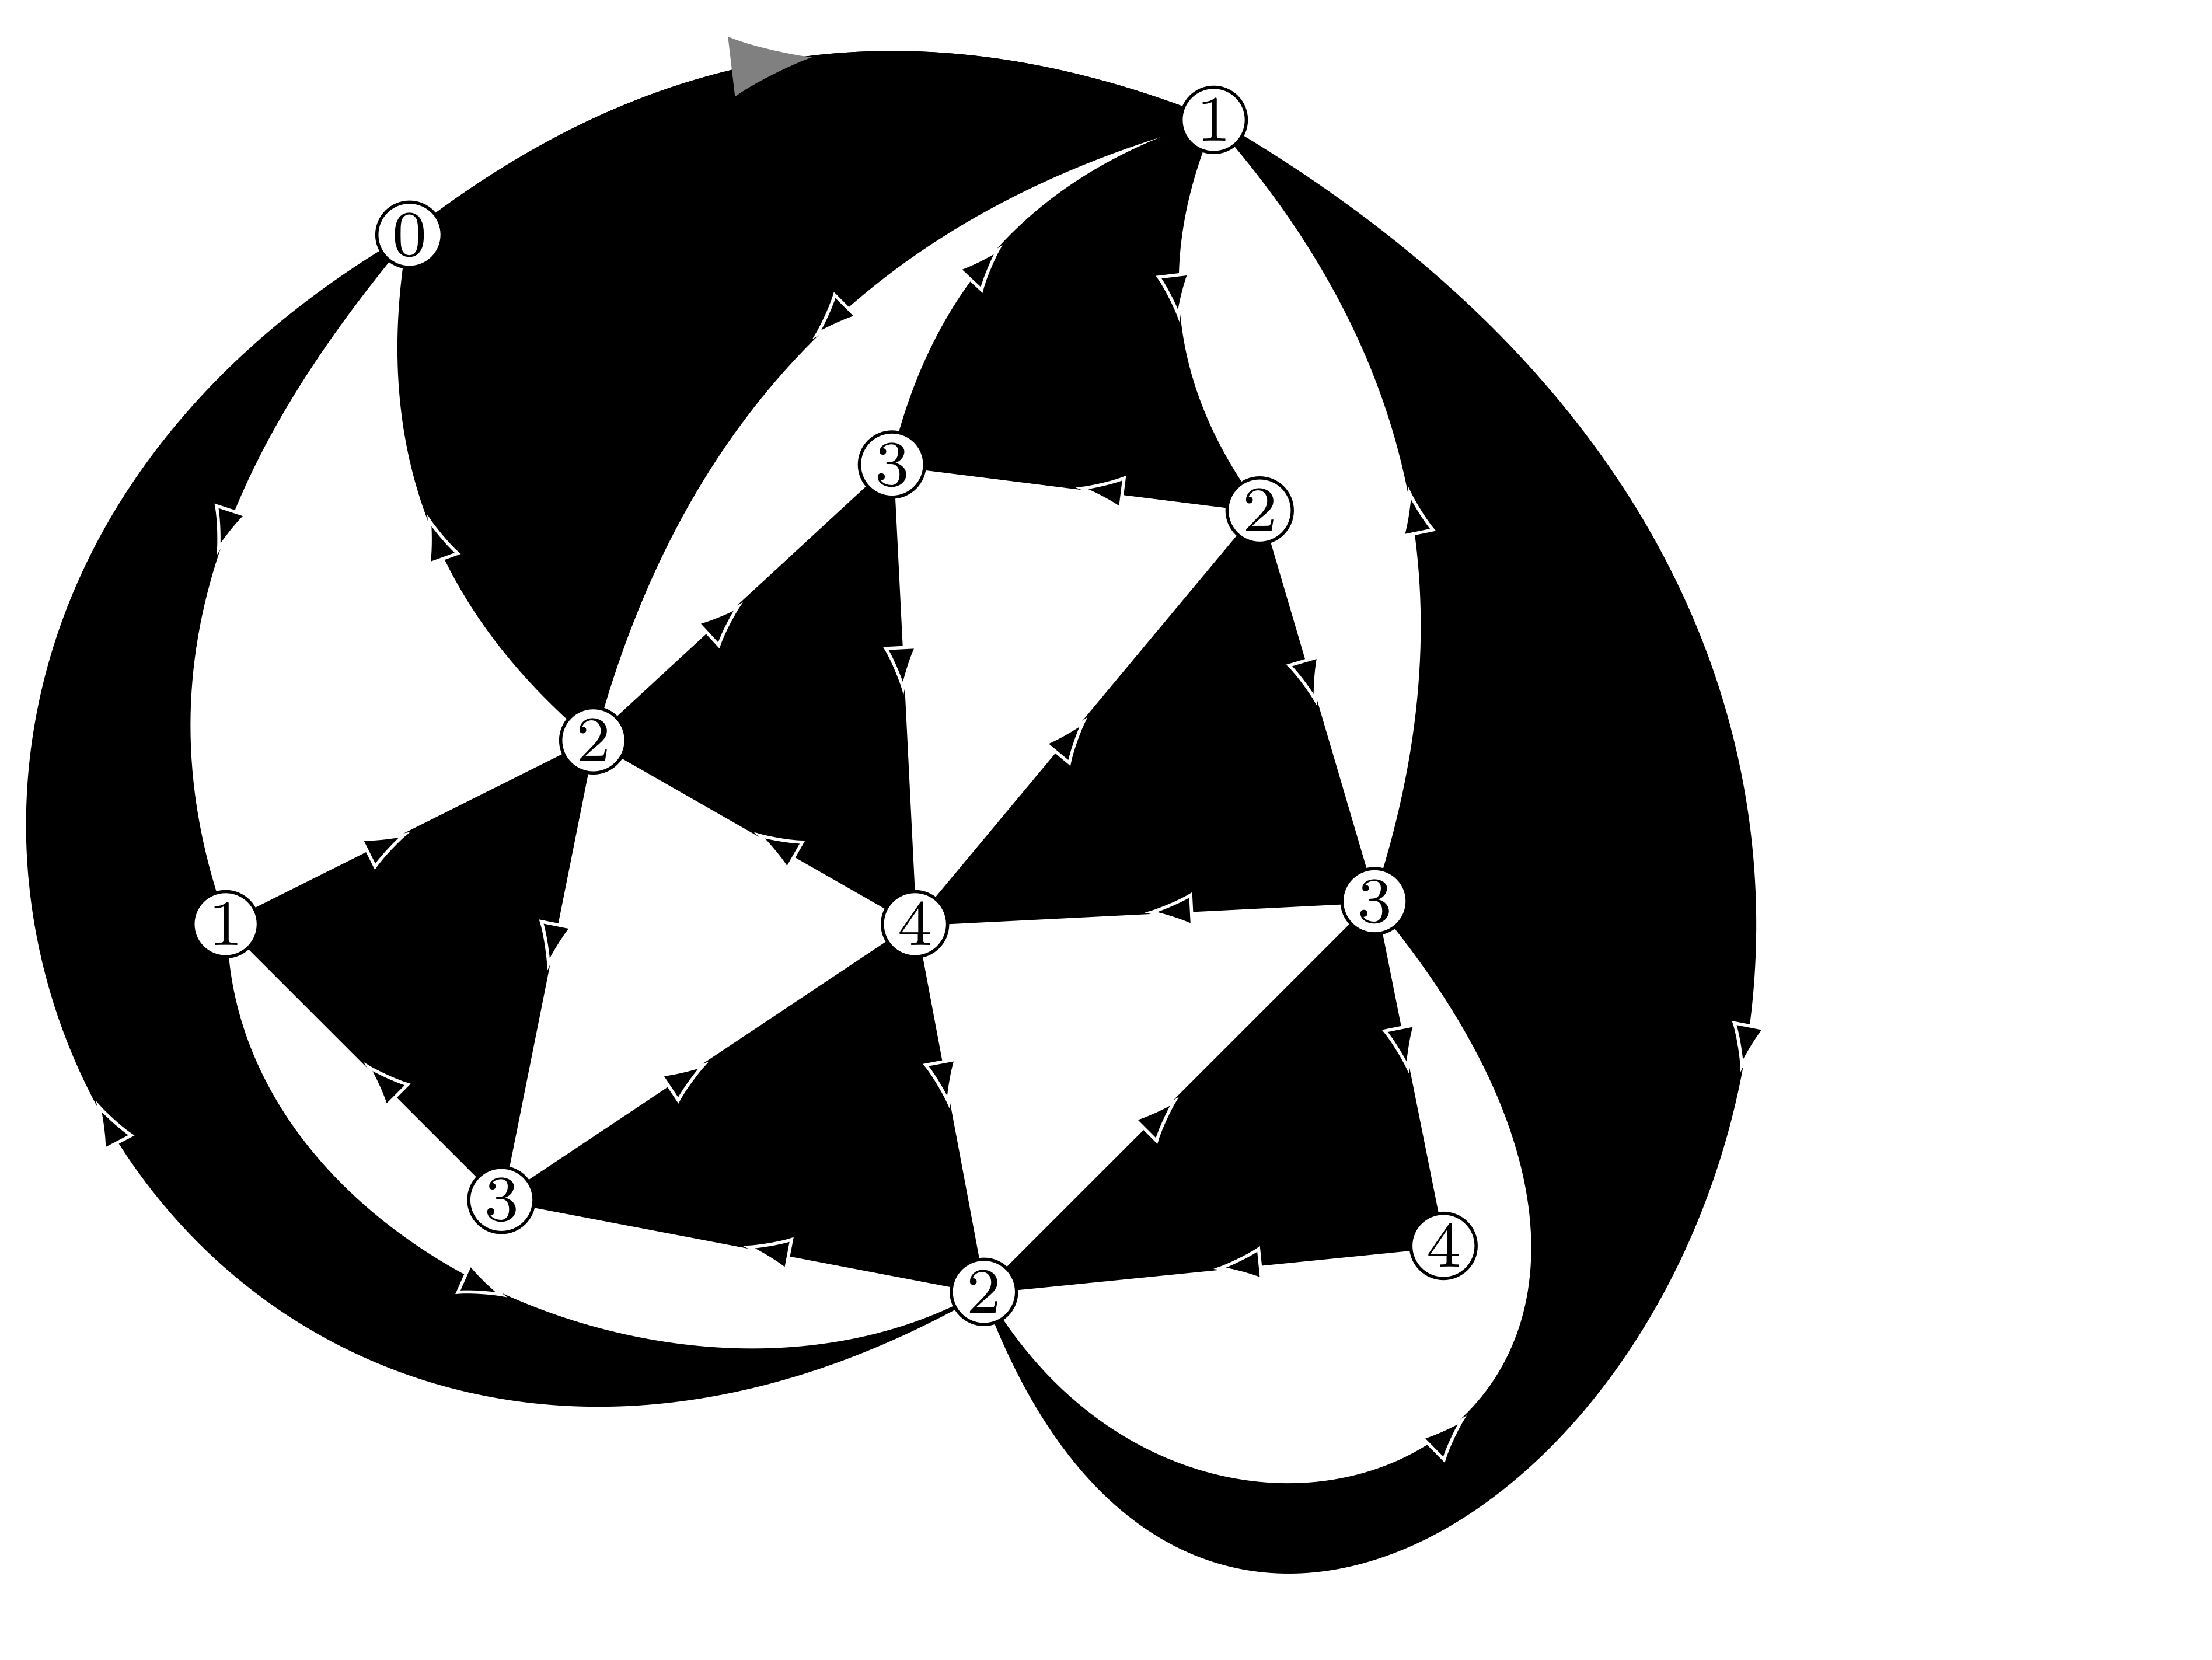 Eulerian triangulation